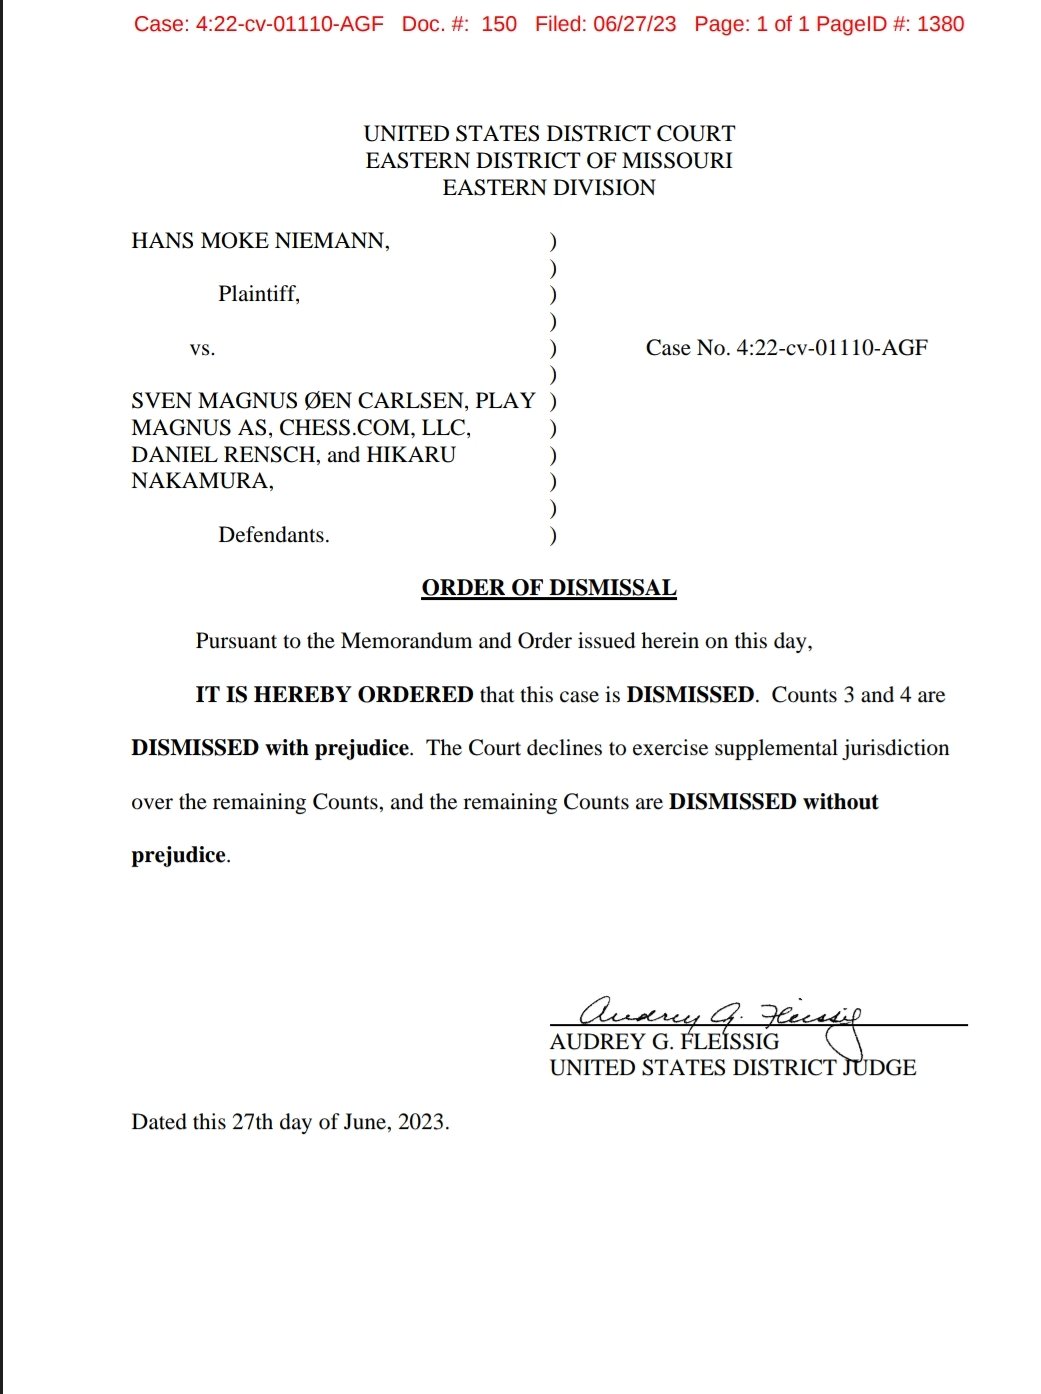 Hikaru Nakamura Files Motion To Dismiss Hans Niemann Lawsuit 